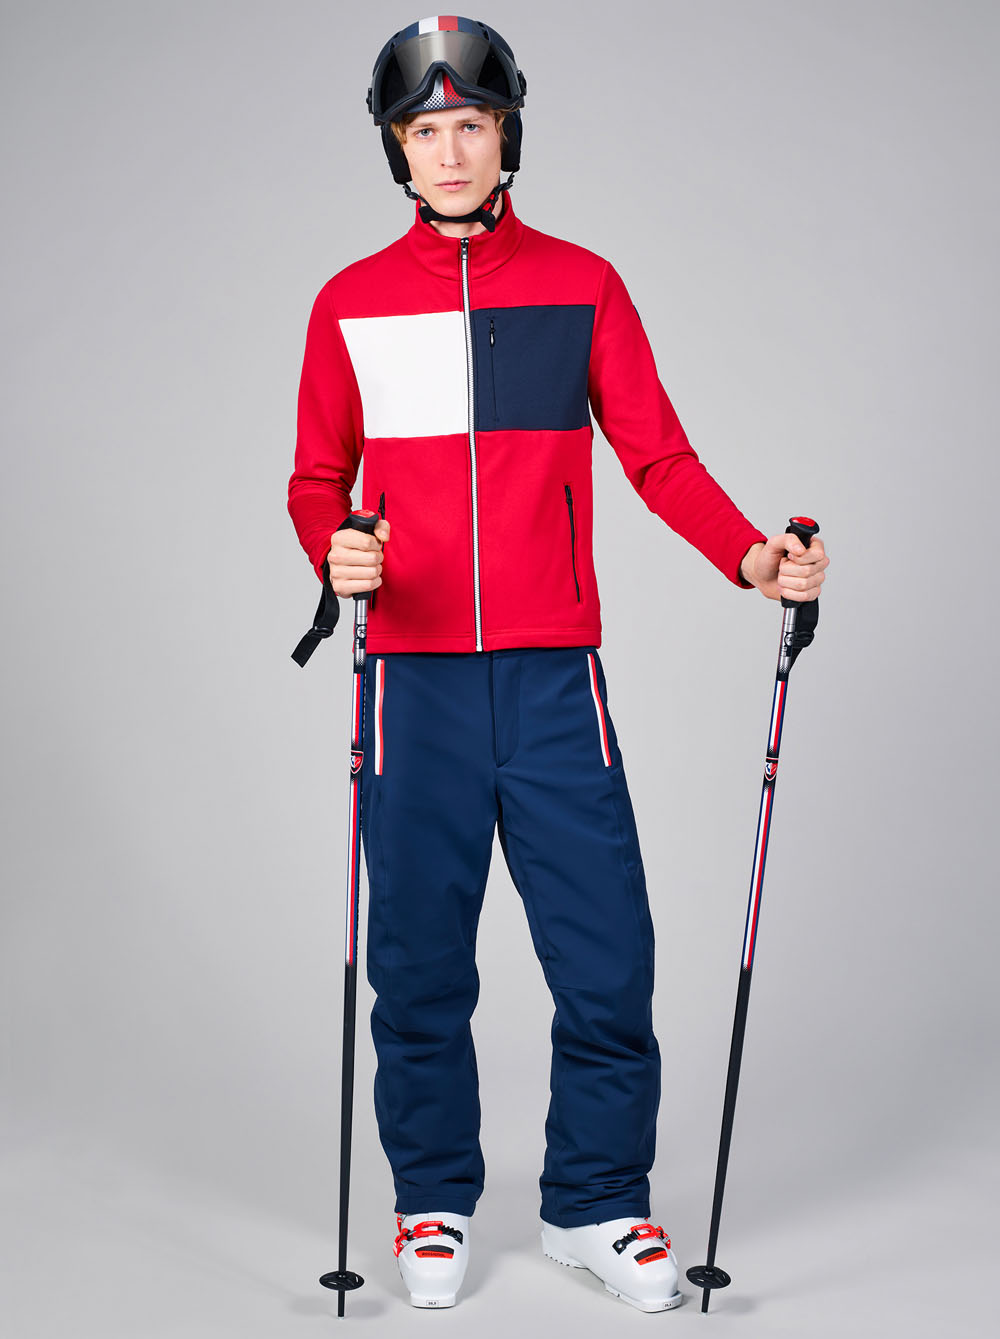 TOMMY HILFIGER于佛罗伦萨男装周期间发布与ROSSIGNOL合作的男式滑雪套装